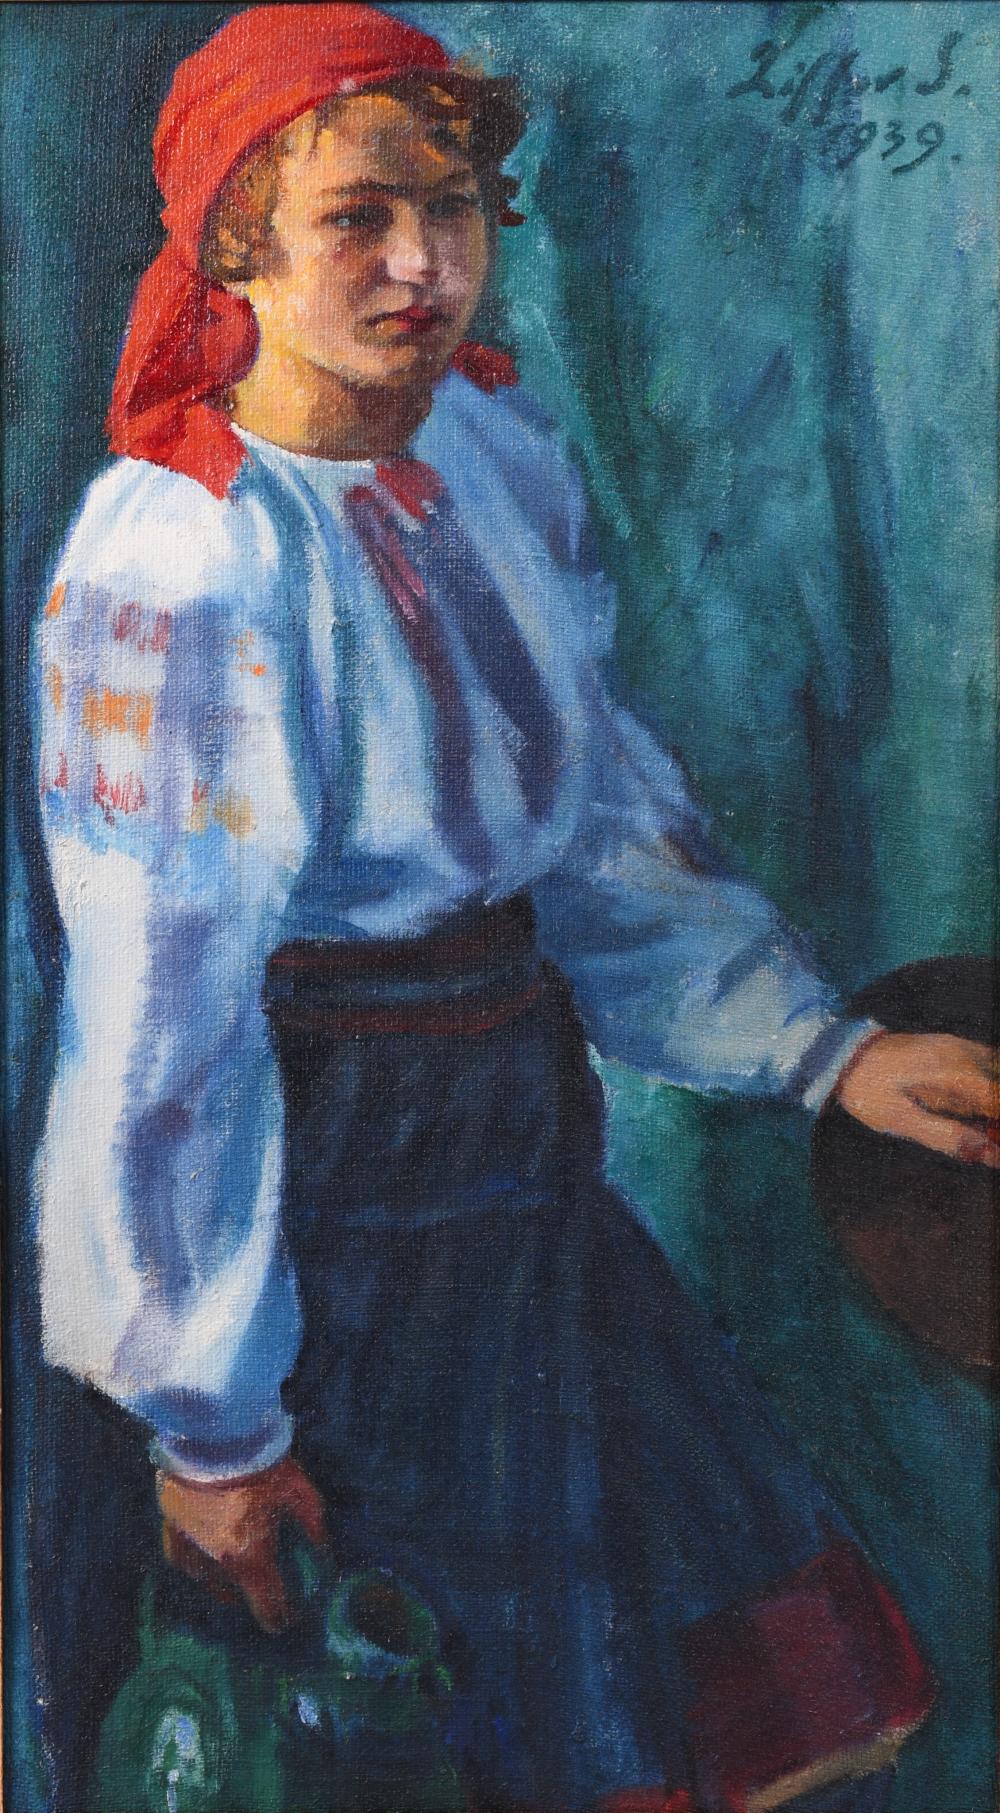 SANDOR ZIFFER, HUNGARIAN 1880-1962,